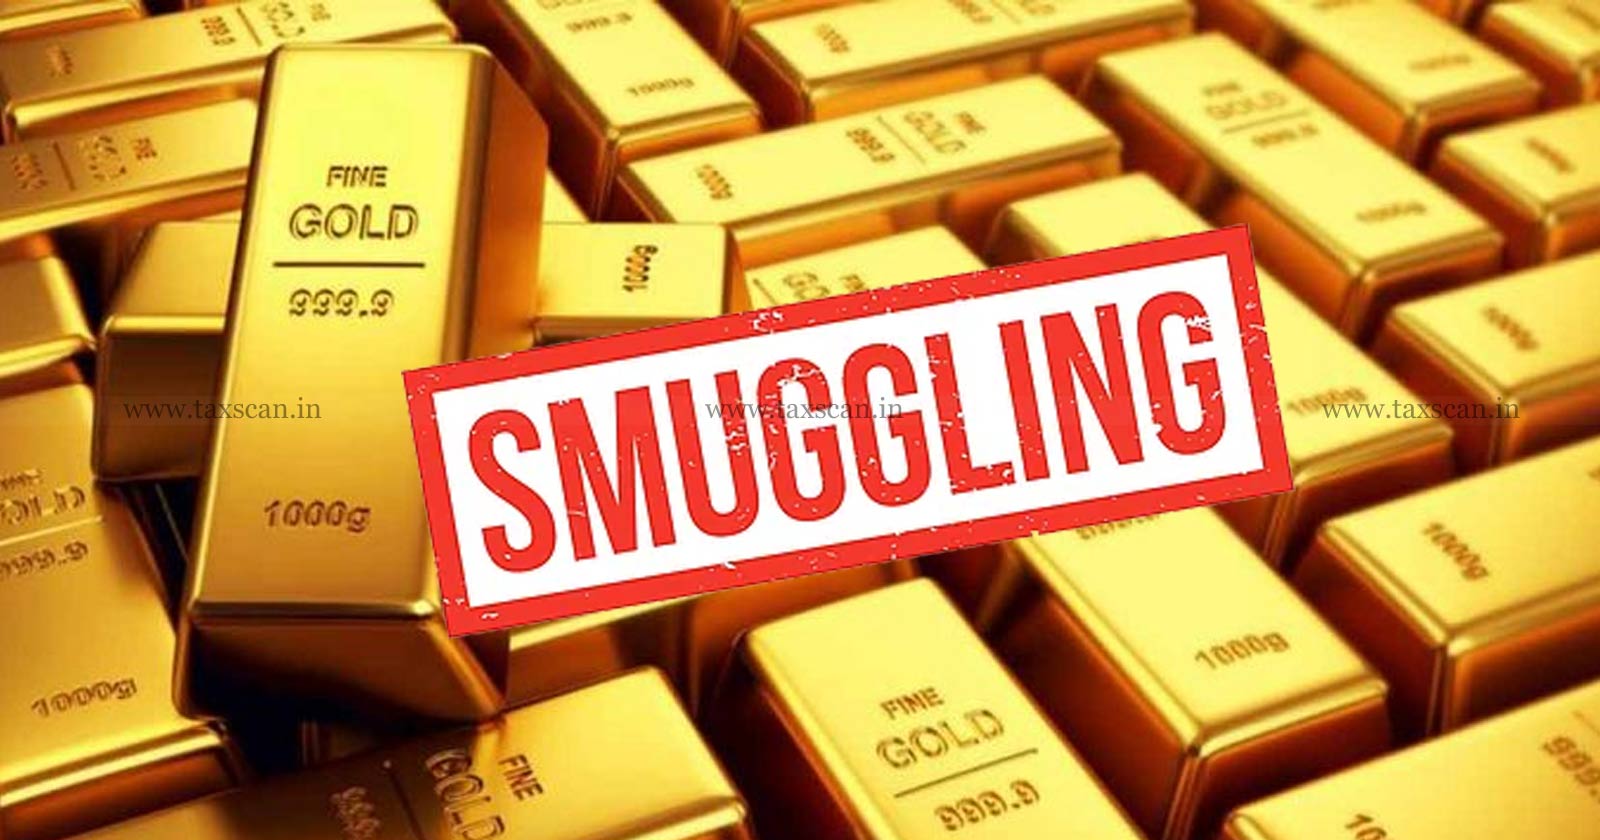 Gold seizure - Guwahati Customs - Customs operation - Gold smuggling in Guwahati - seizure of gold bars - TAXSCAN